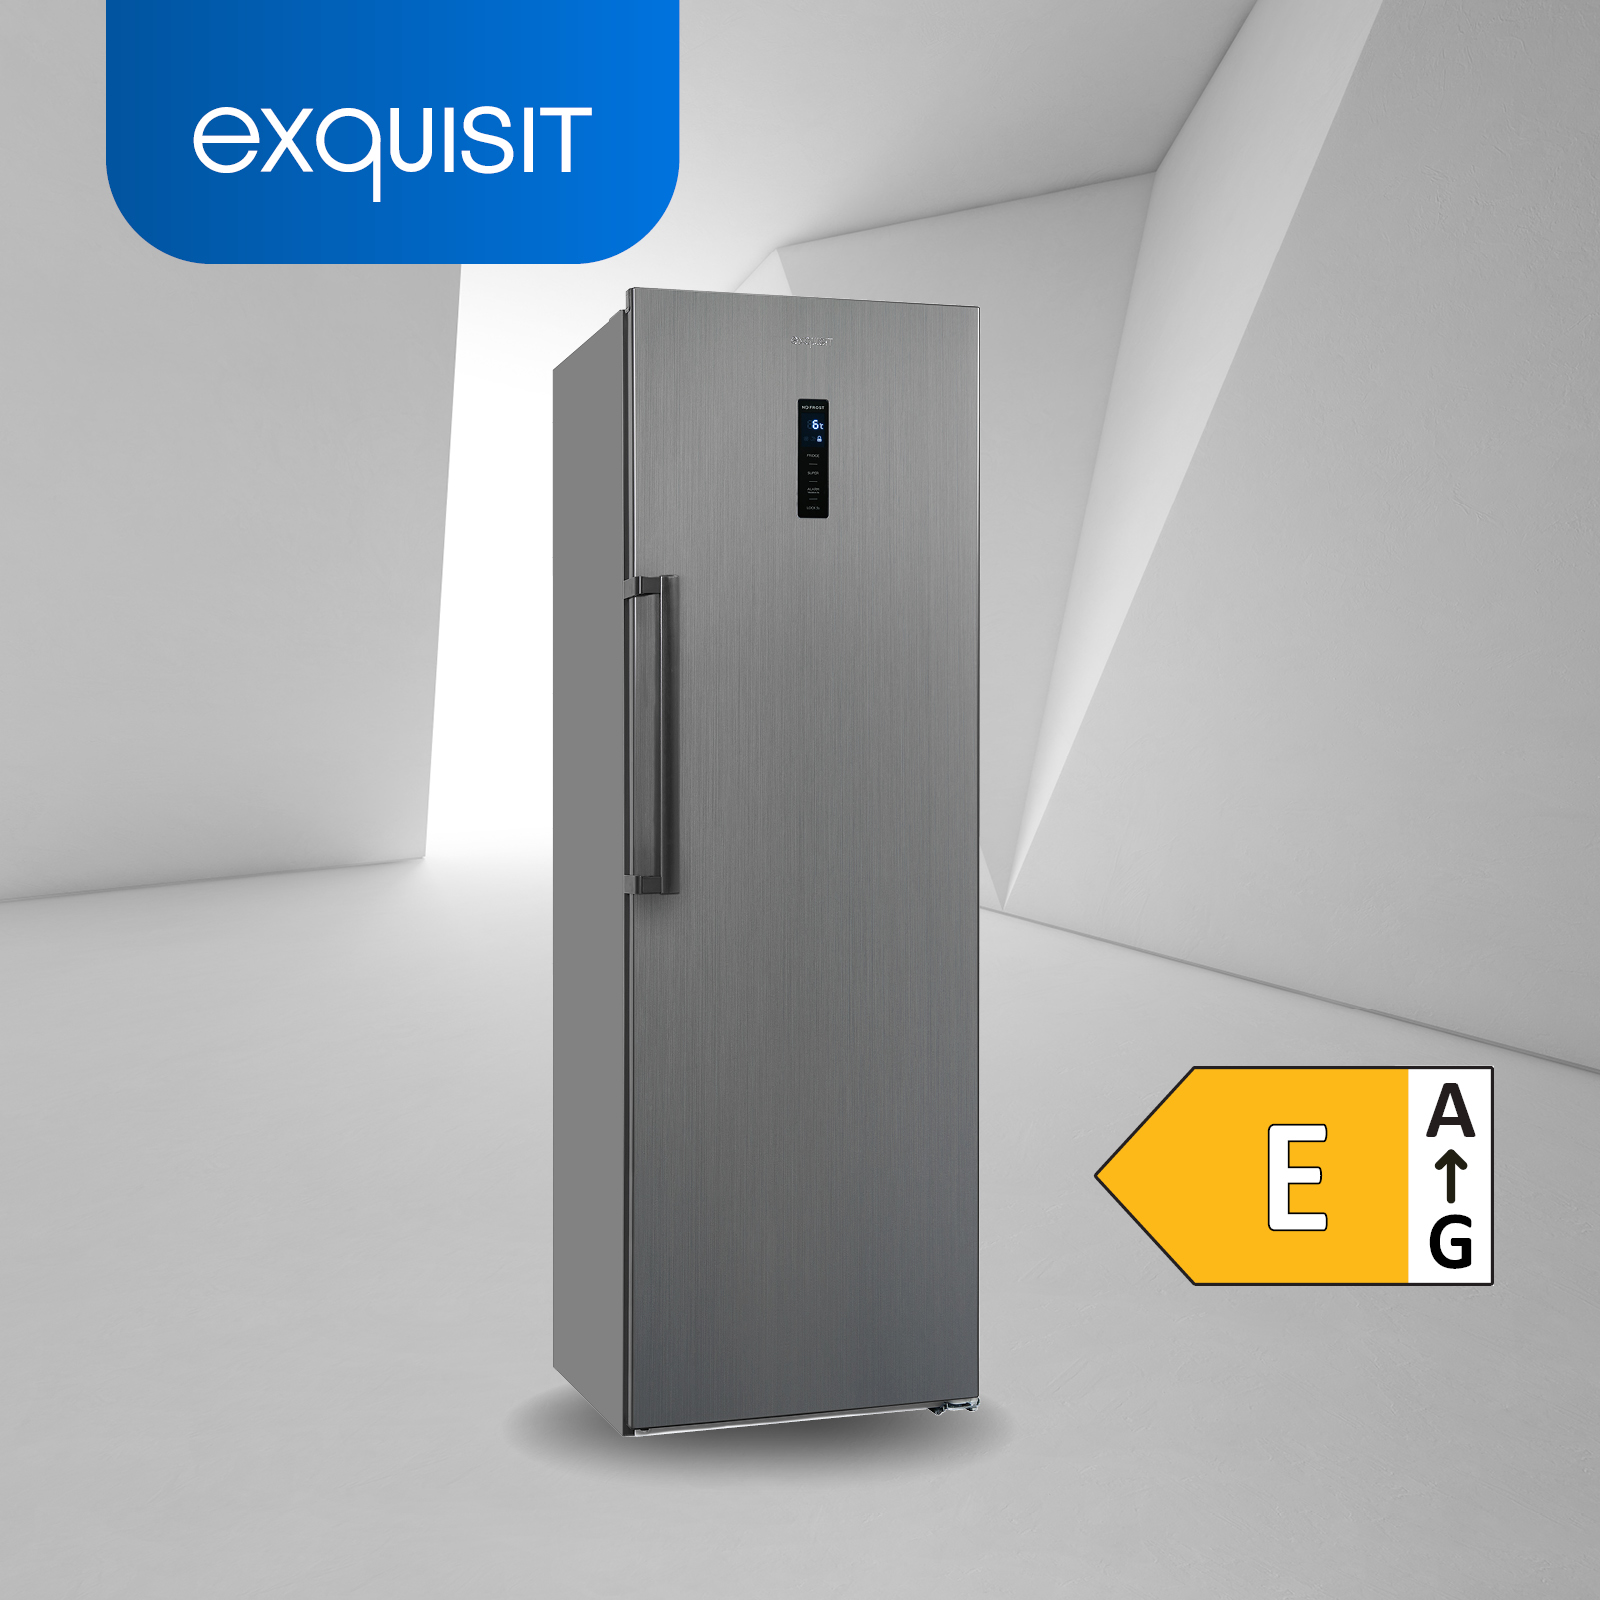 EXQUISIT KS360-V-HE-040E inoxlook-az hoch, Kühlschrank 1850 kWh/Jahr, Edelstahloptik) (118,00 E, mm